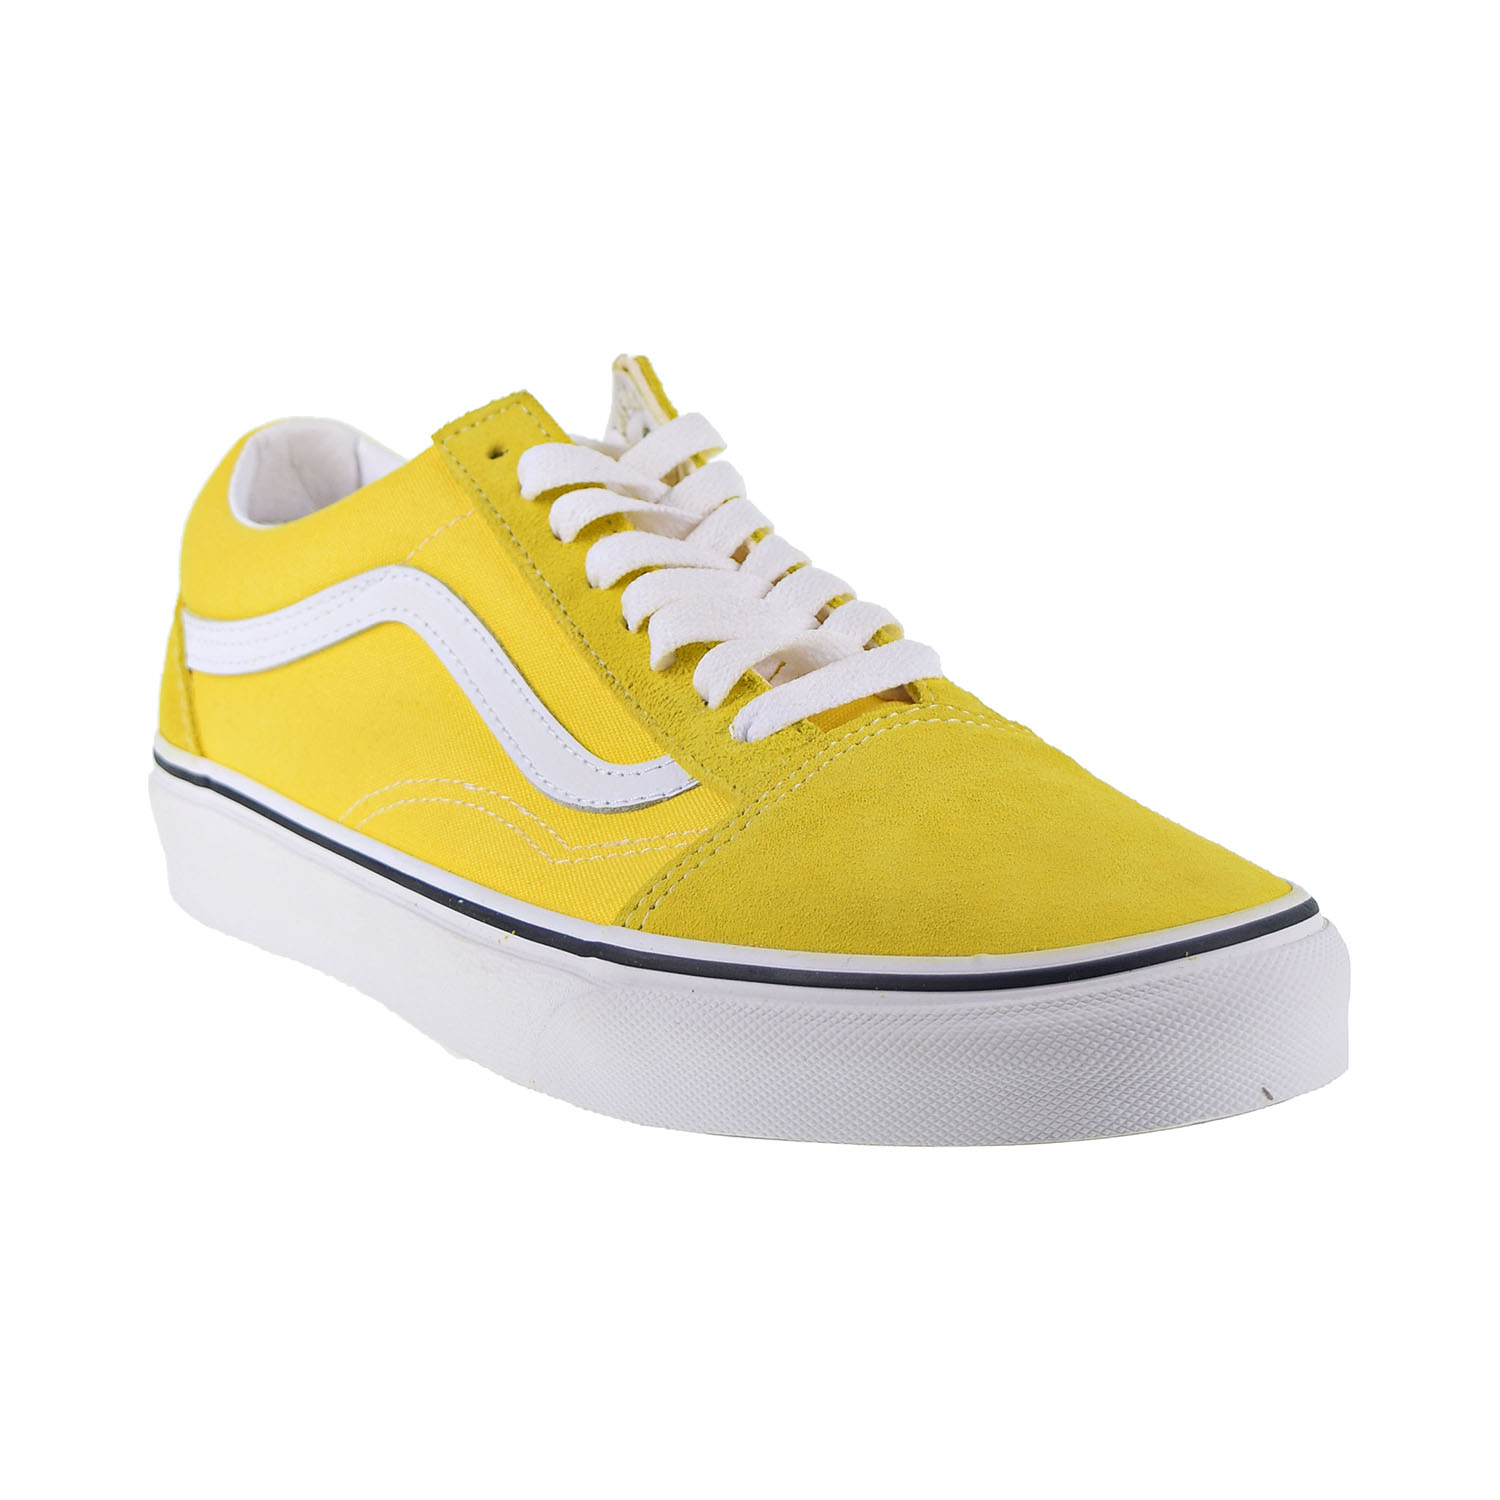 Shoes Vibrant Yellow-True White 